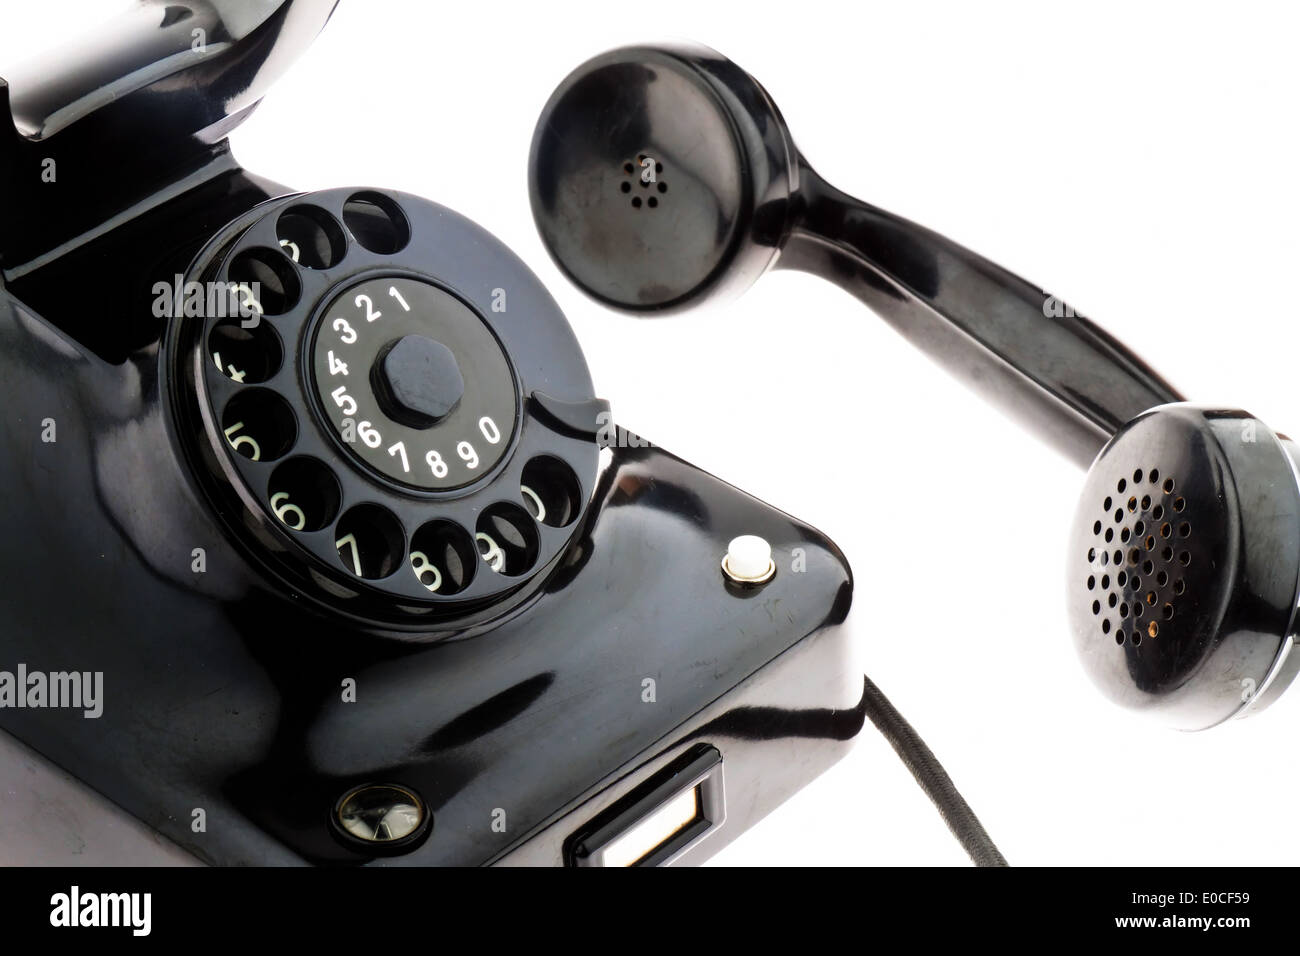 Un antico, vecchia rete fissa telefonica. Telefono su sfondo bianco, Ein antikes, altes Festnetz Telephon. Telefon auf weissem H Foto Stock